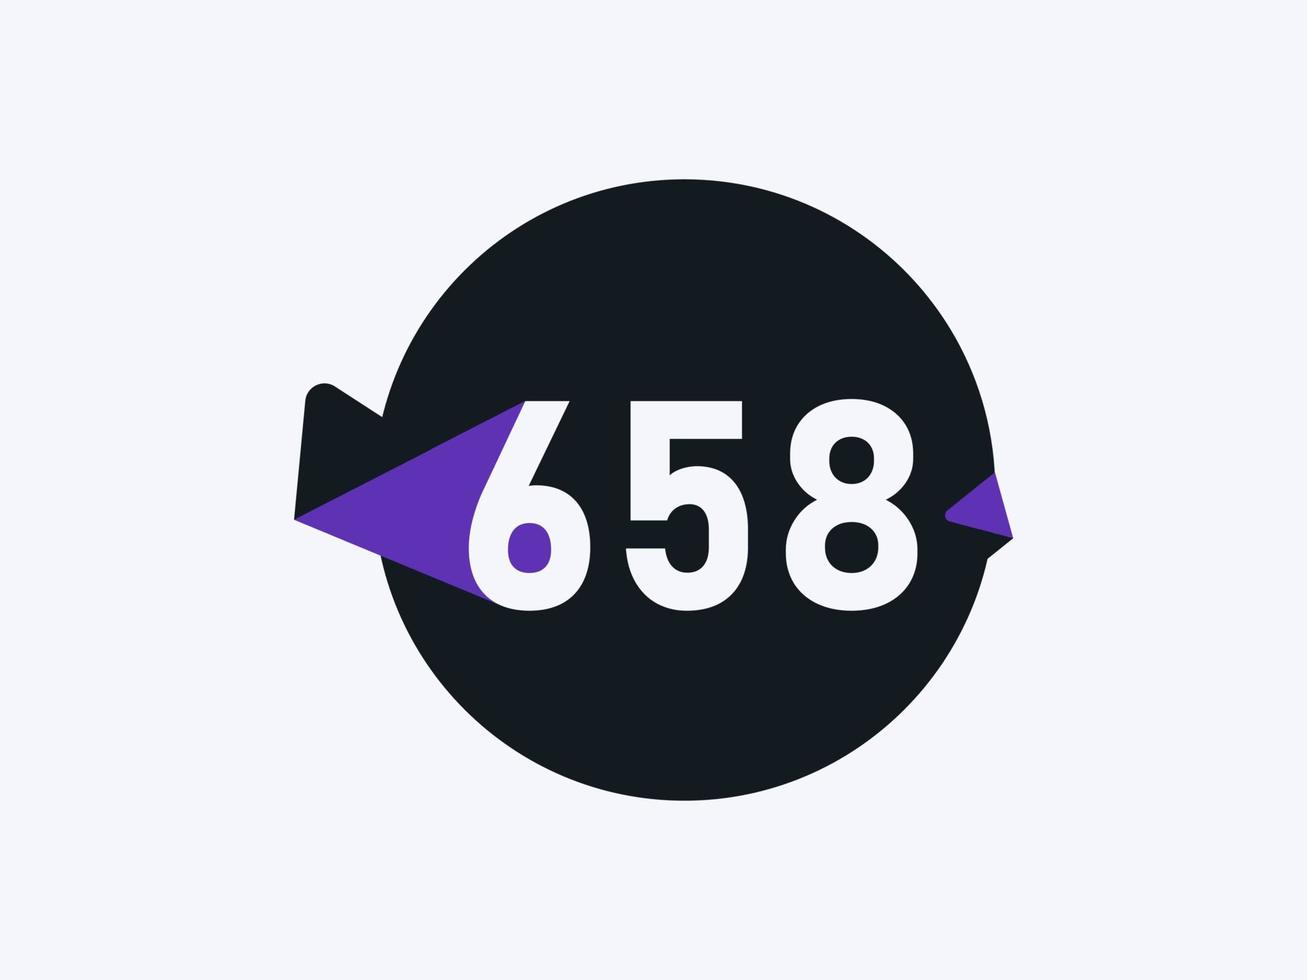 658 Number logo icon design vector image. Number logo icon design vector image